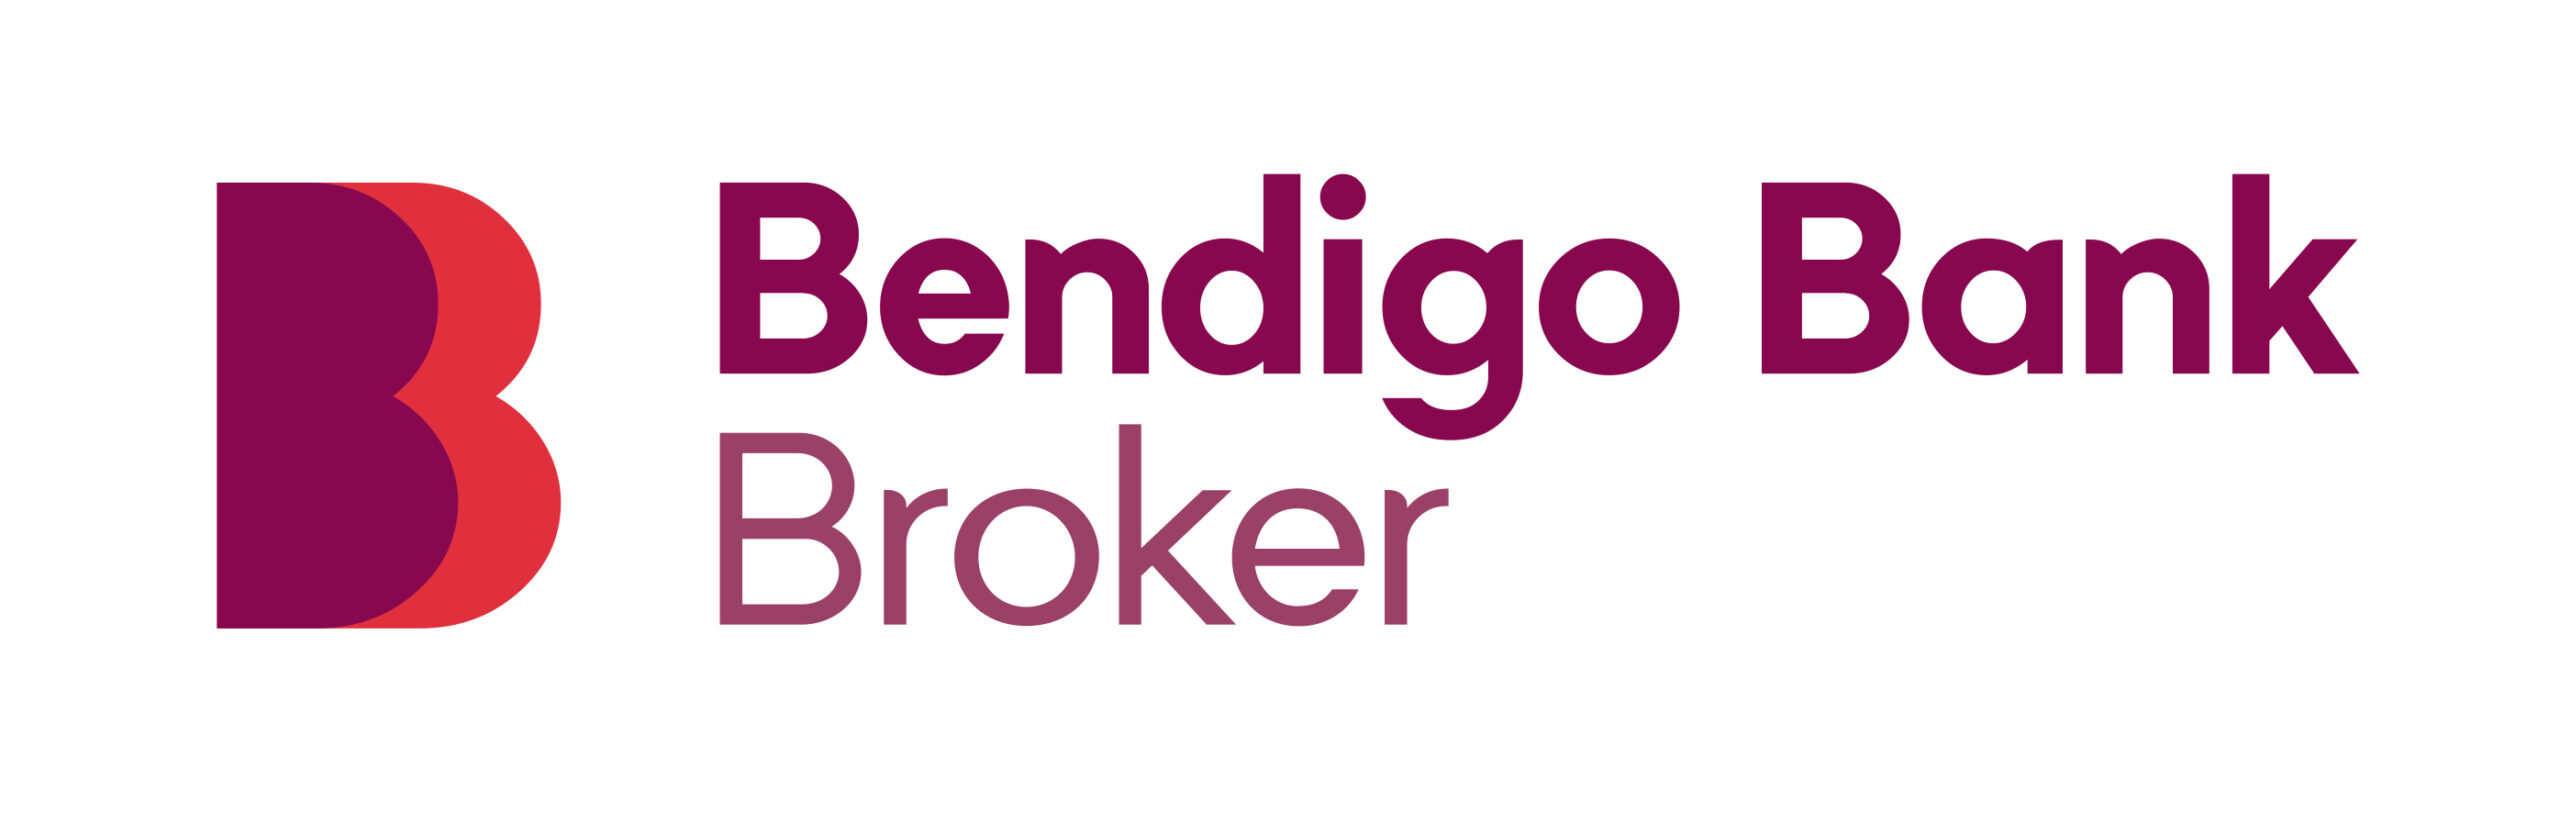 Bendigo Bank Broker